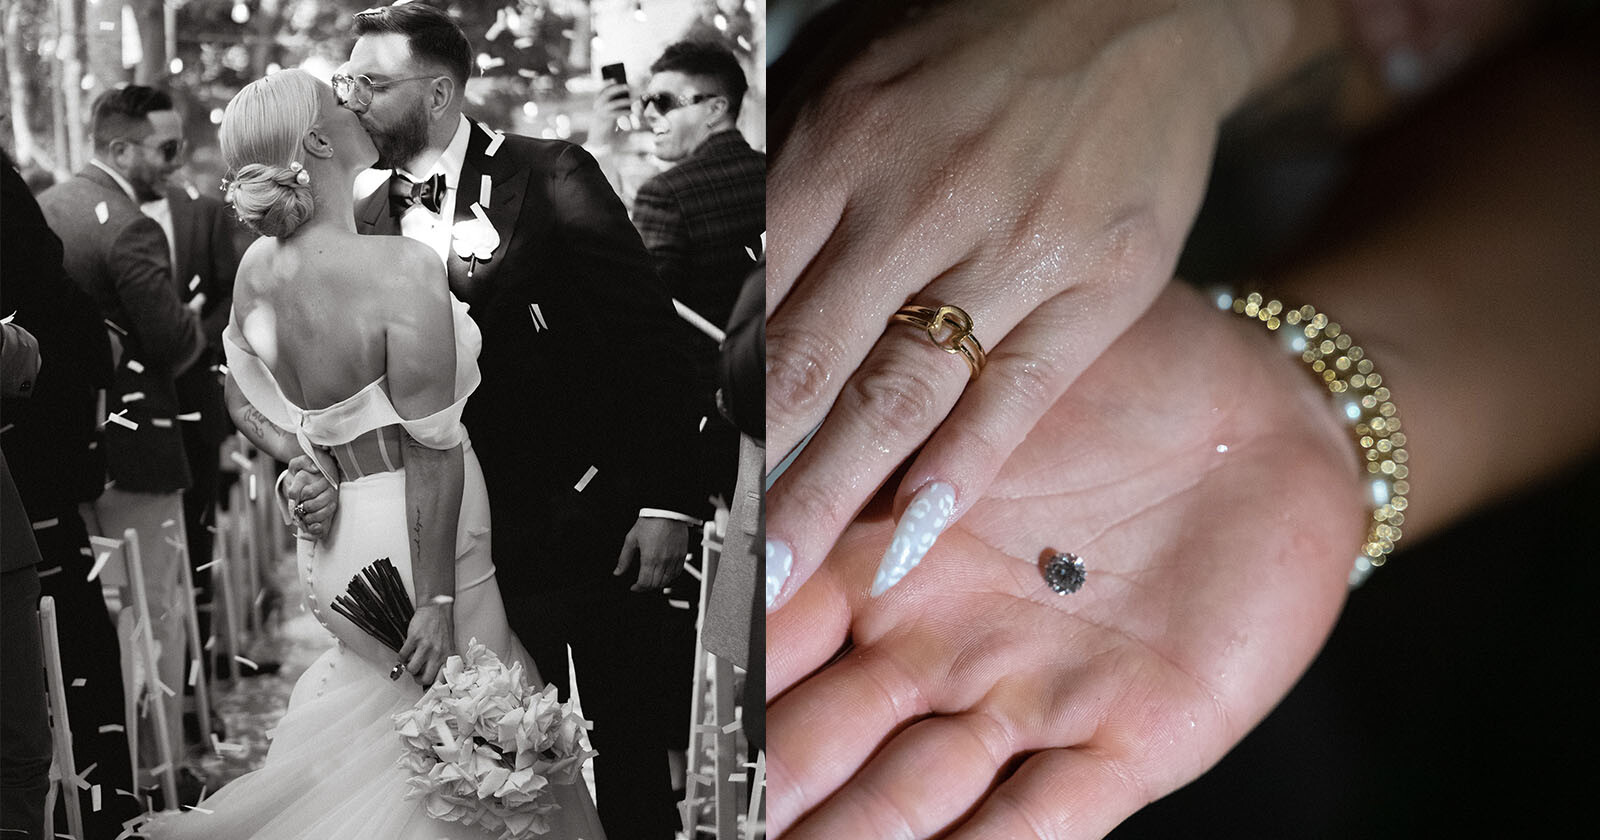  wedding photographer uses photos find bride lost diamond 